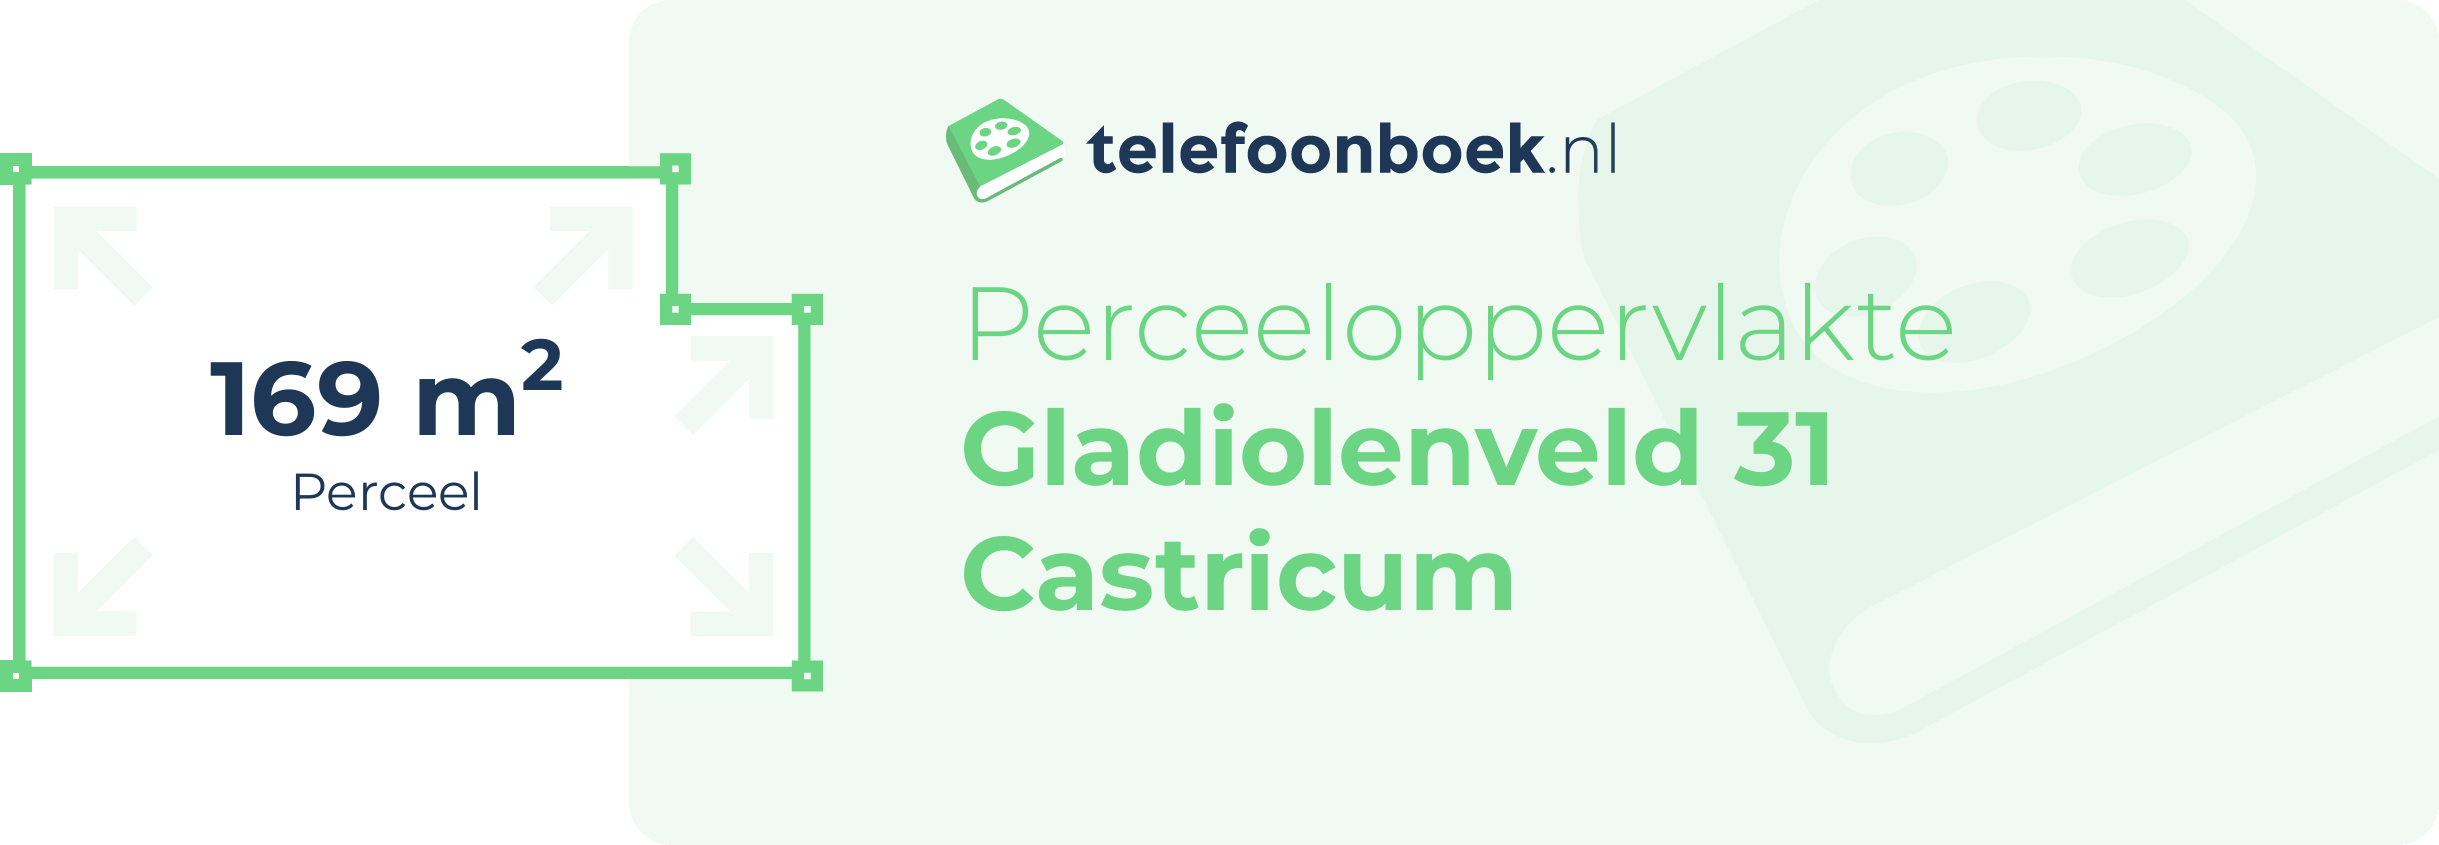 Perceeloppervlakte Gladiolenveld 31 Castricum